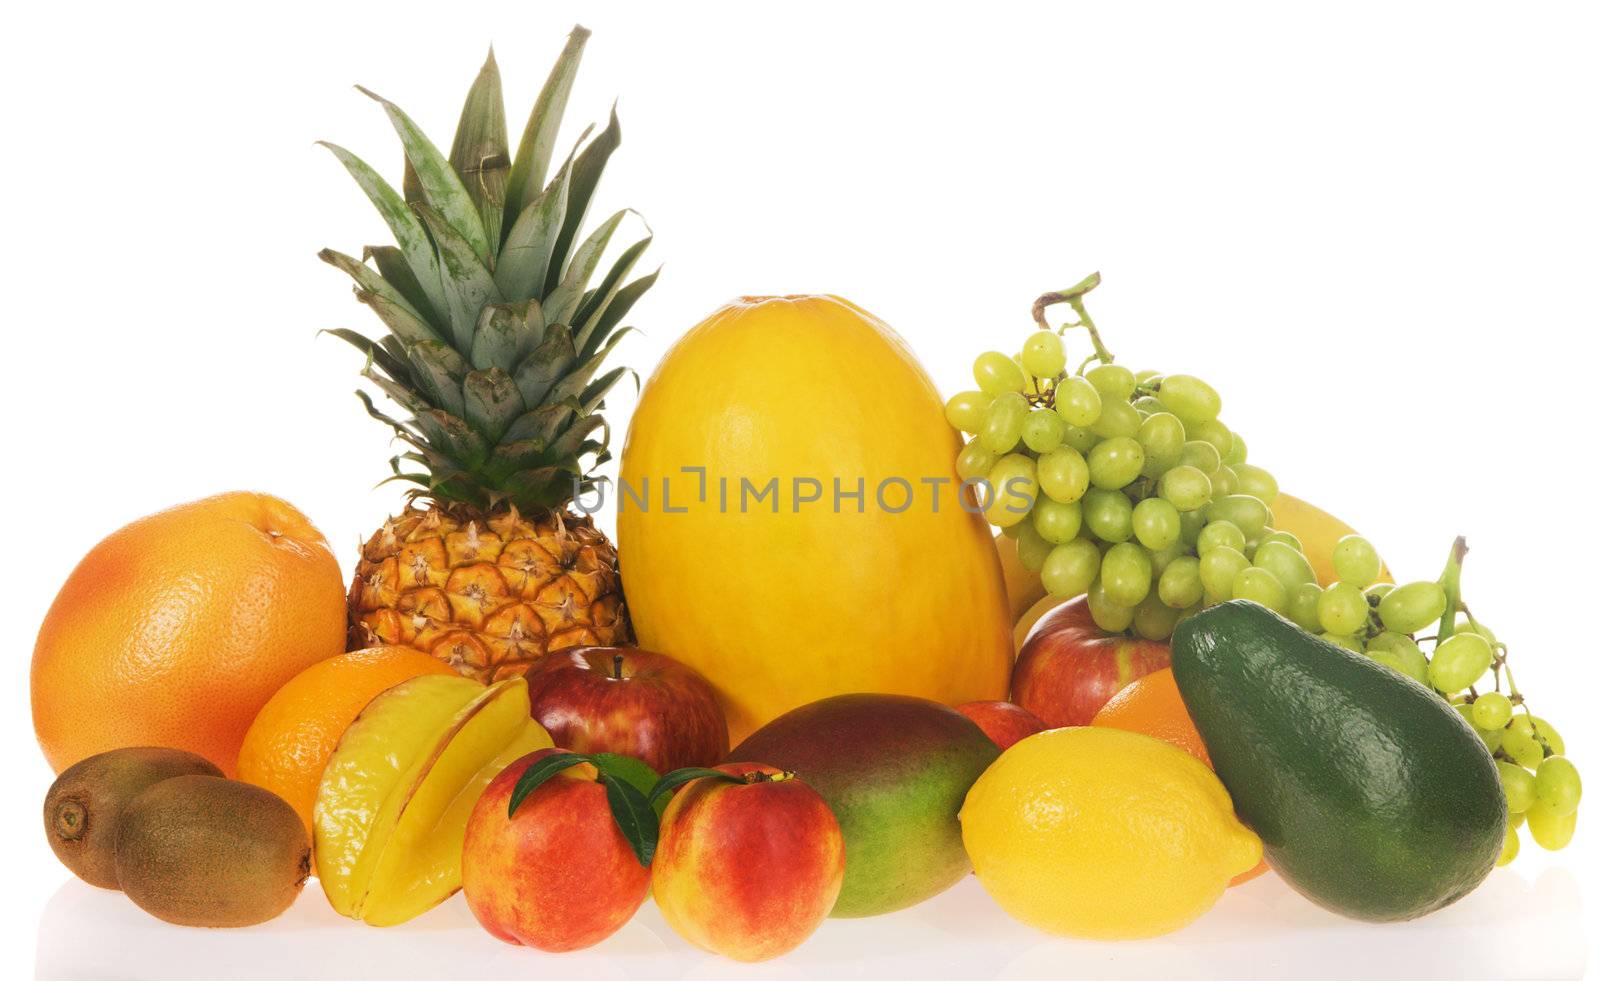 Assortment of fresh fruits by Gdolgikh